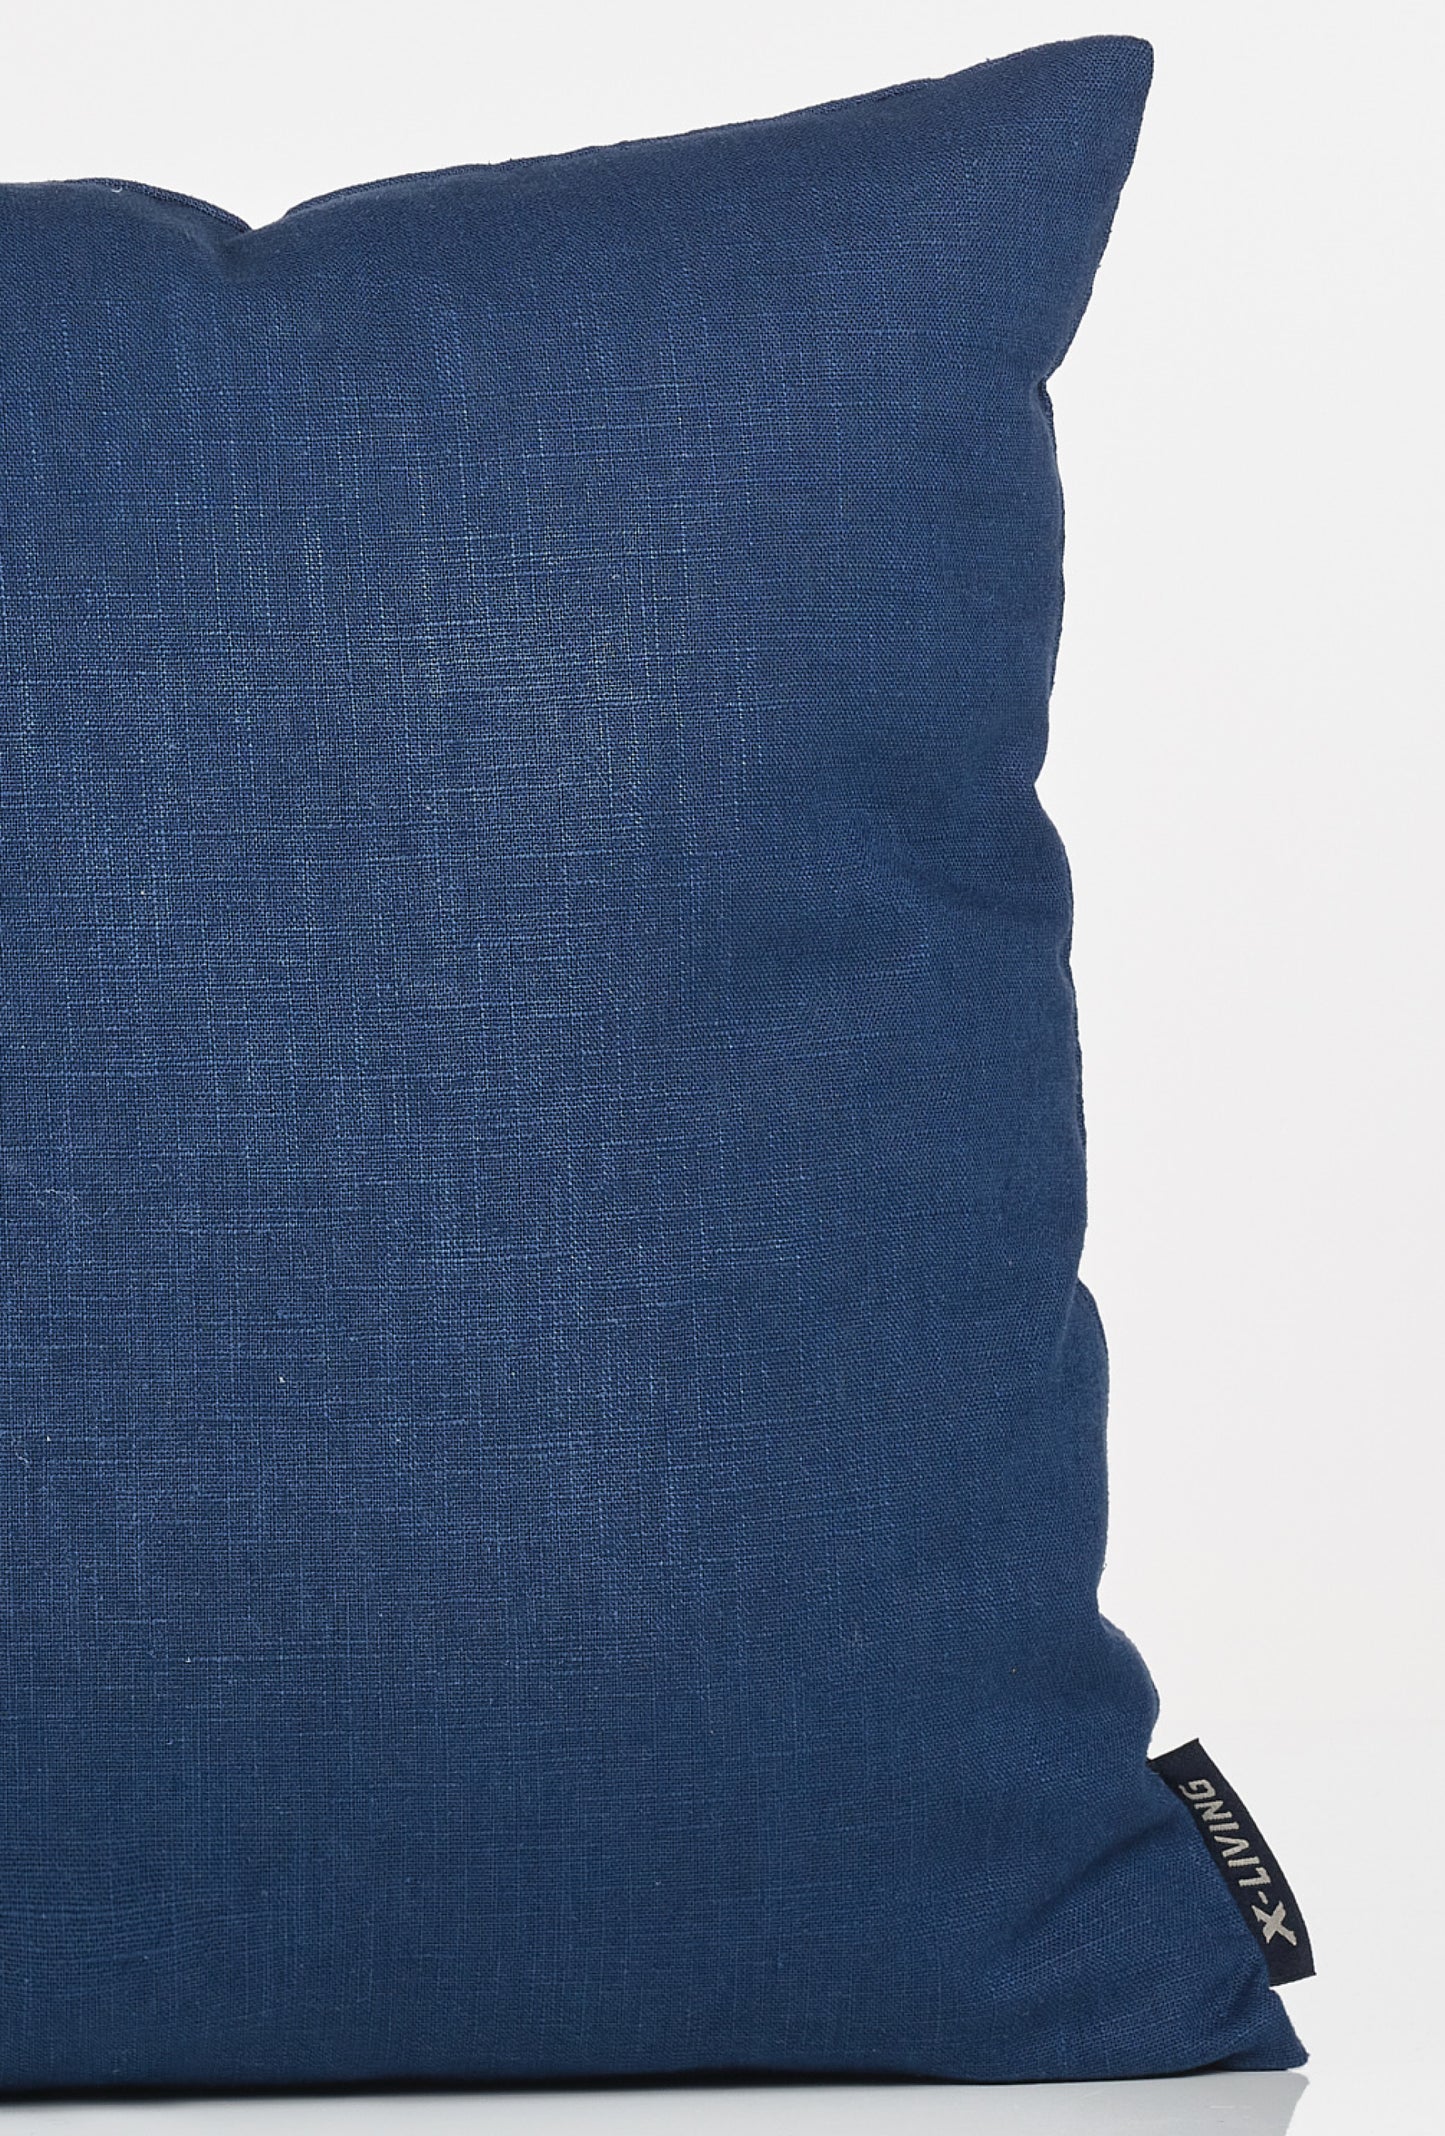 KATHRINE Brushed cotton decorative cushion - Deep Blue / Petroleum Blue (42x42)